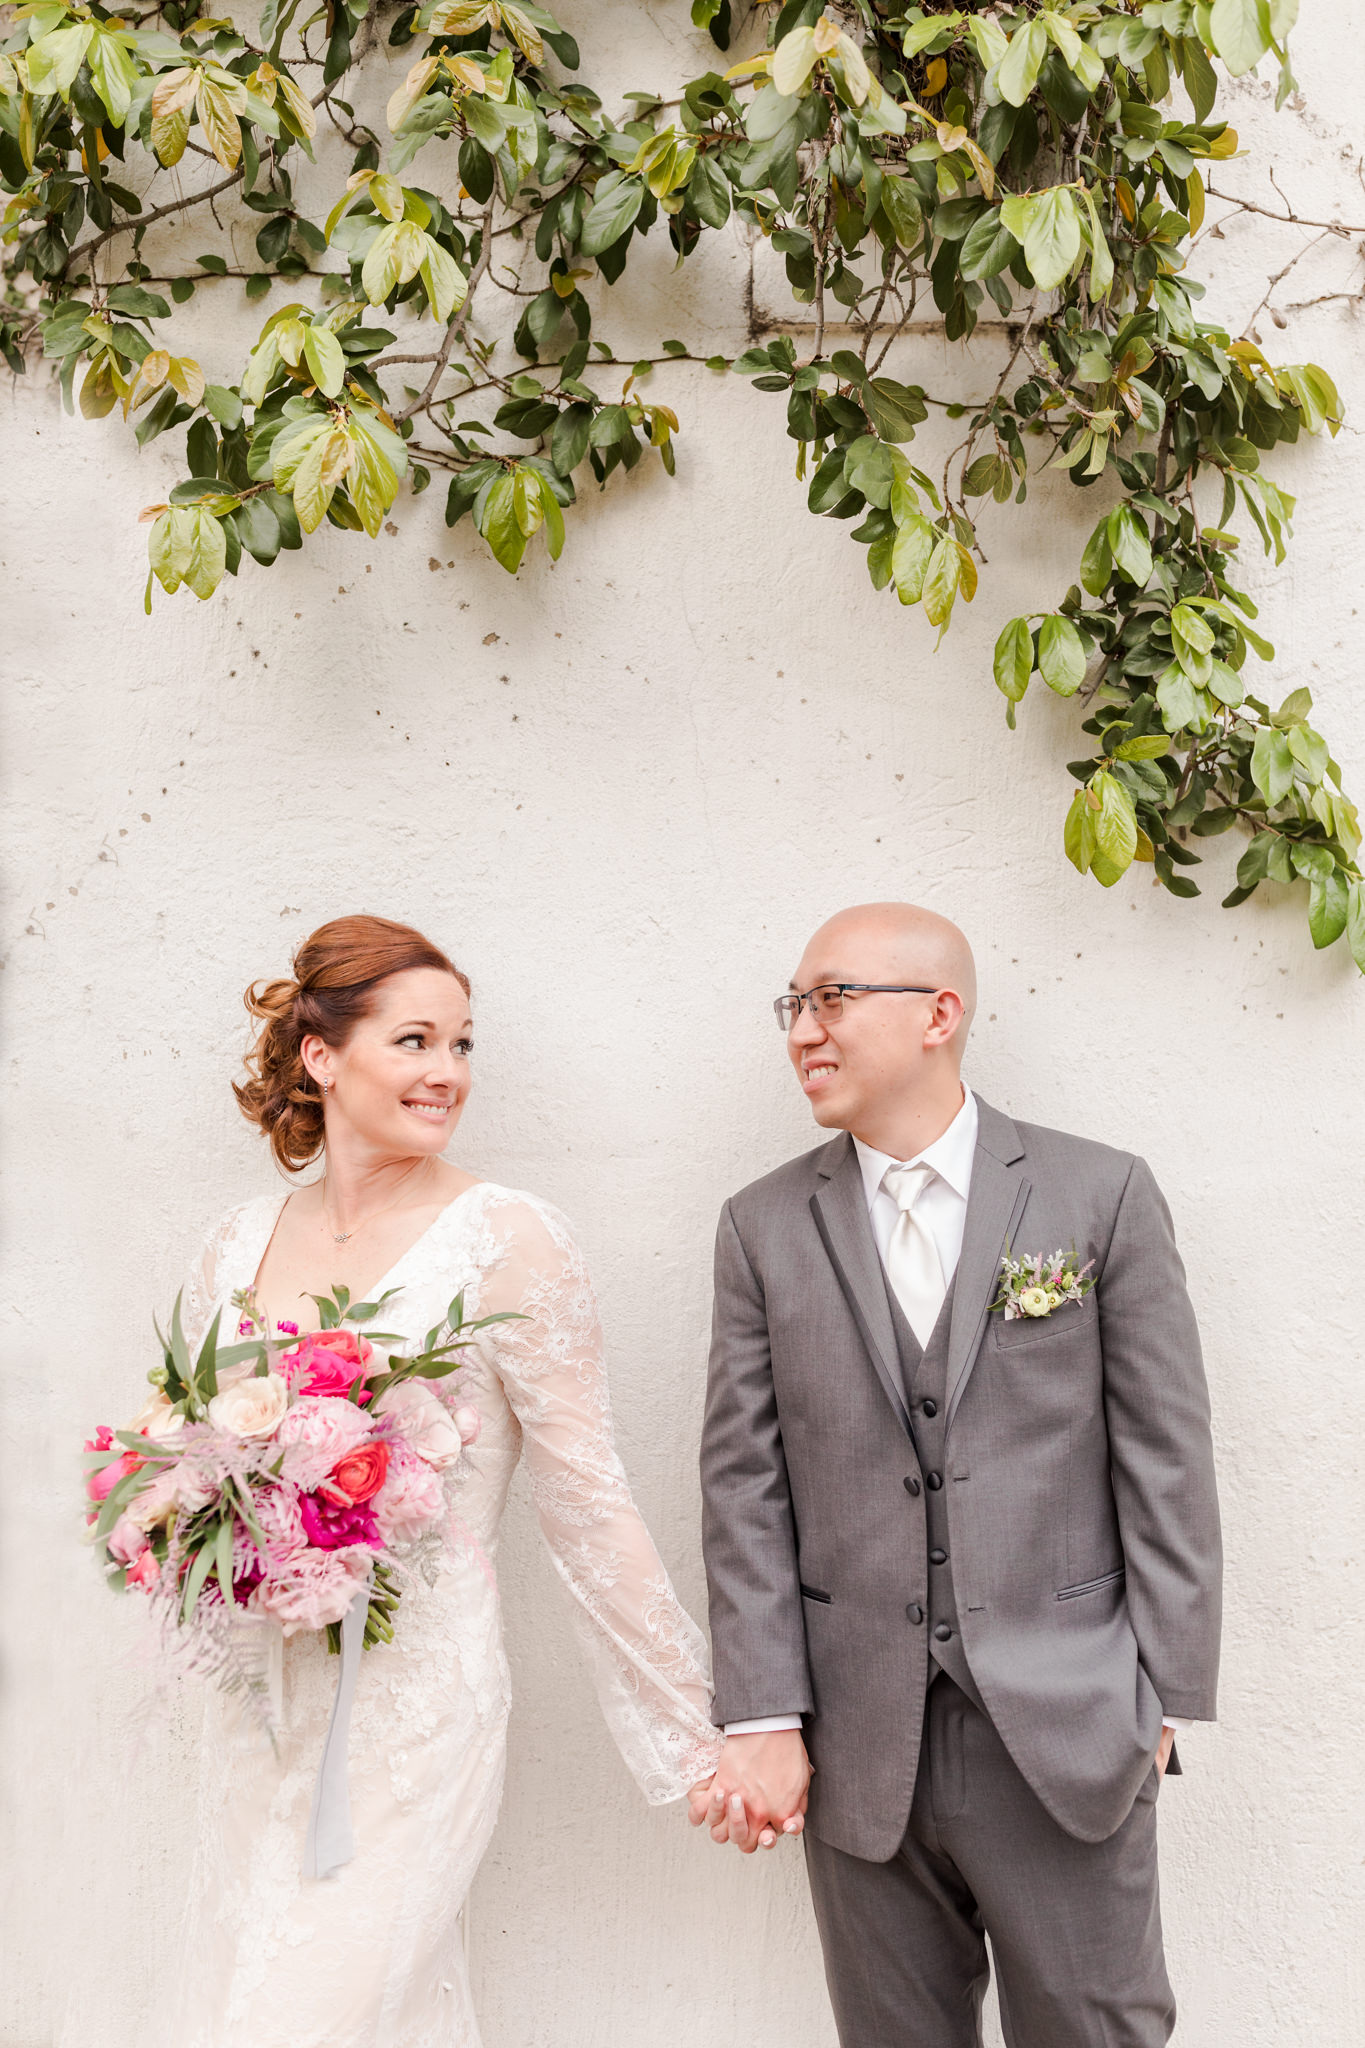 A Sage and Blush Wedding at the Briscoe in San Antonio, TX by Dawn Elizabeth Studios, San Antonio Wedding Photographer